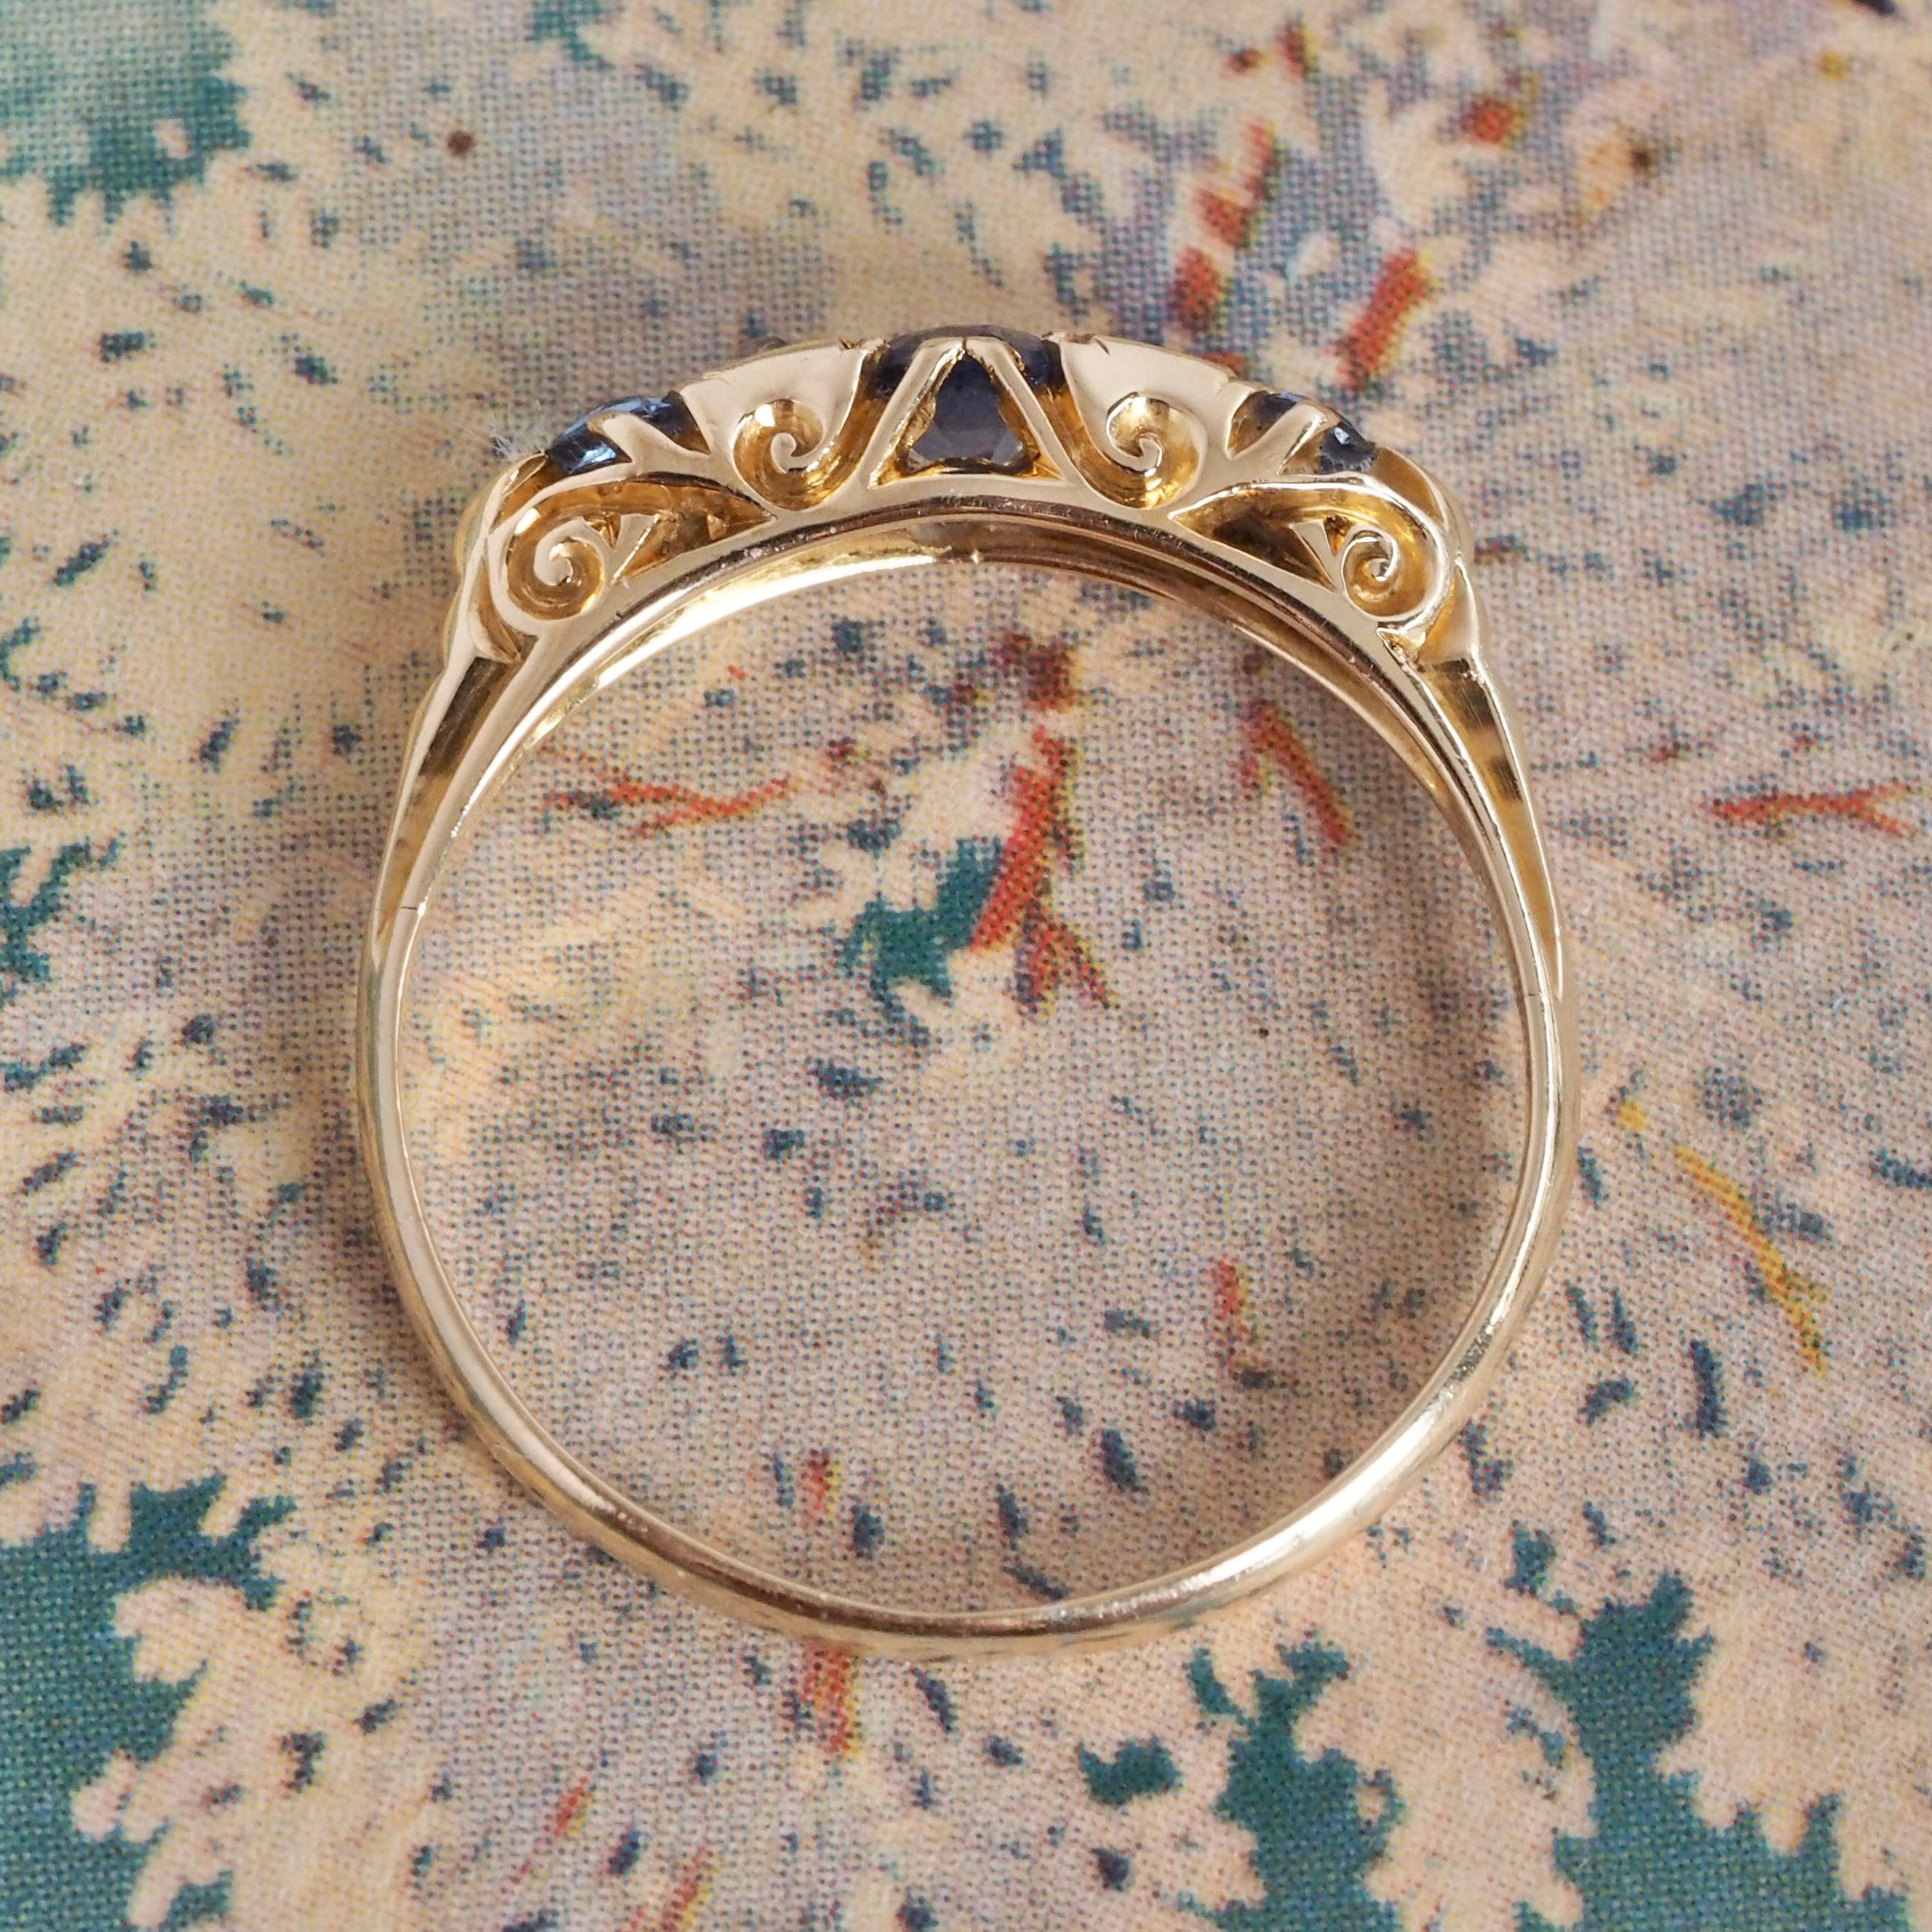 Antique Edwardian English 18k Gold Sapphire and Diamond Ring